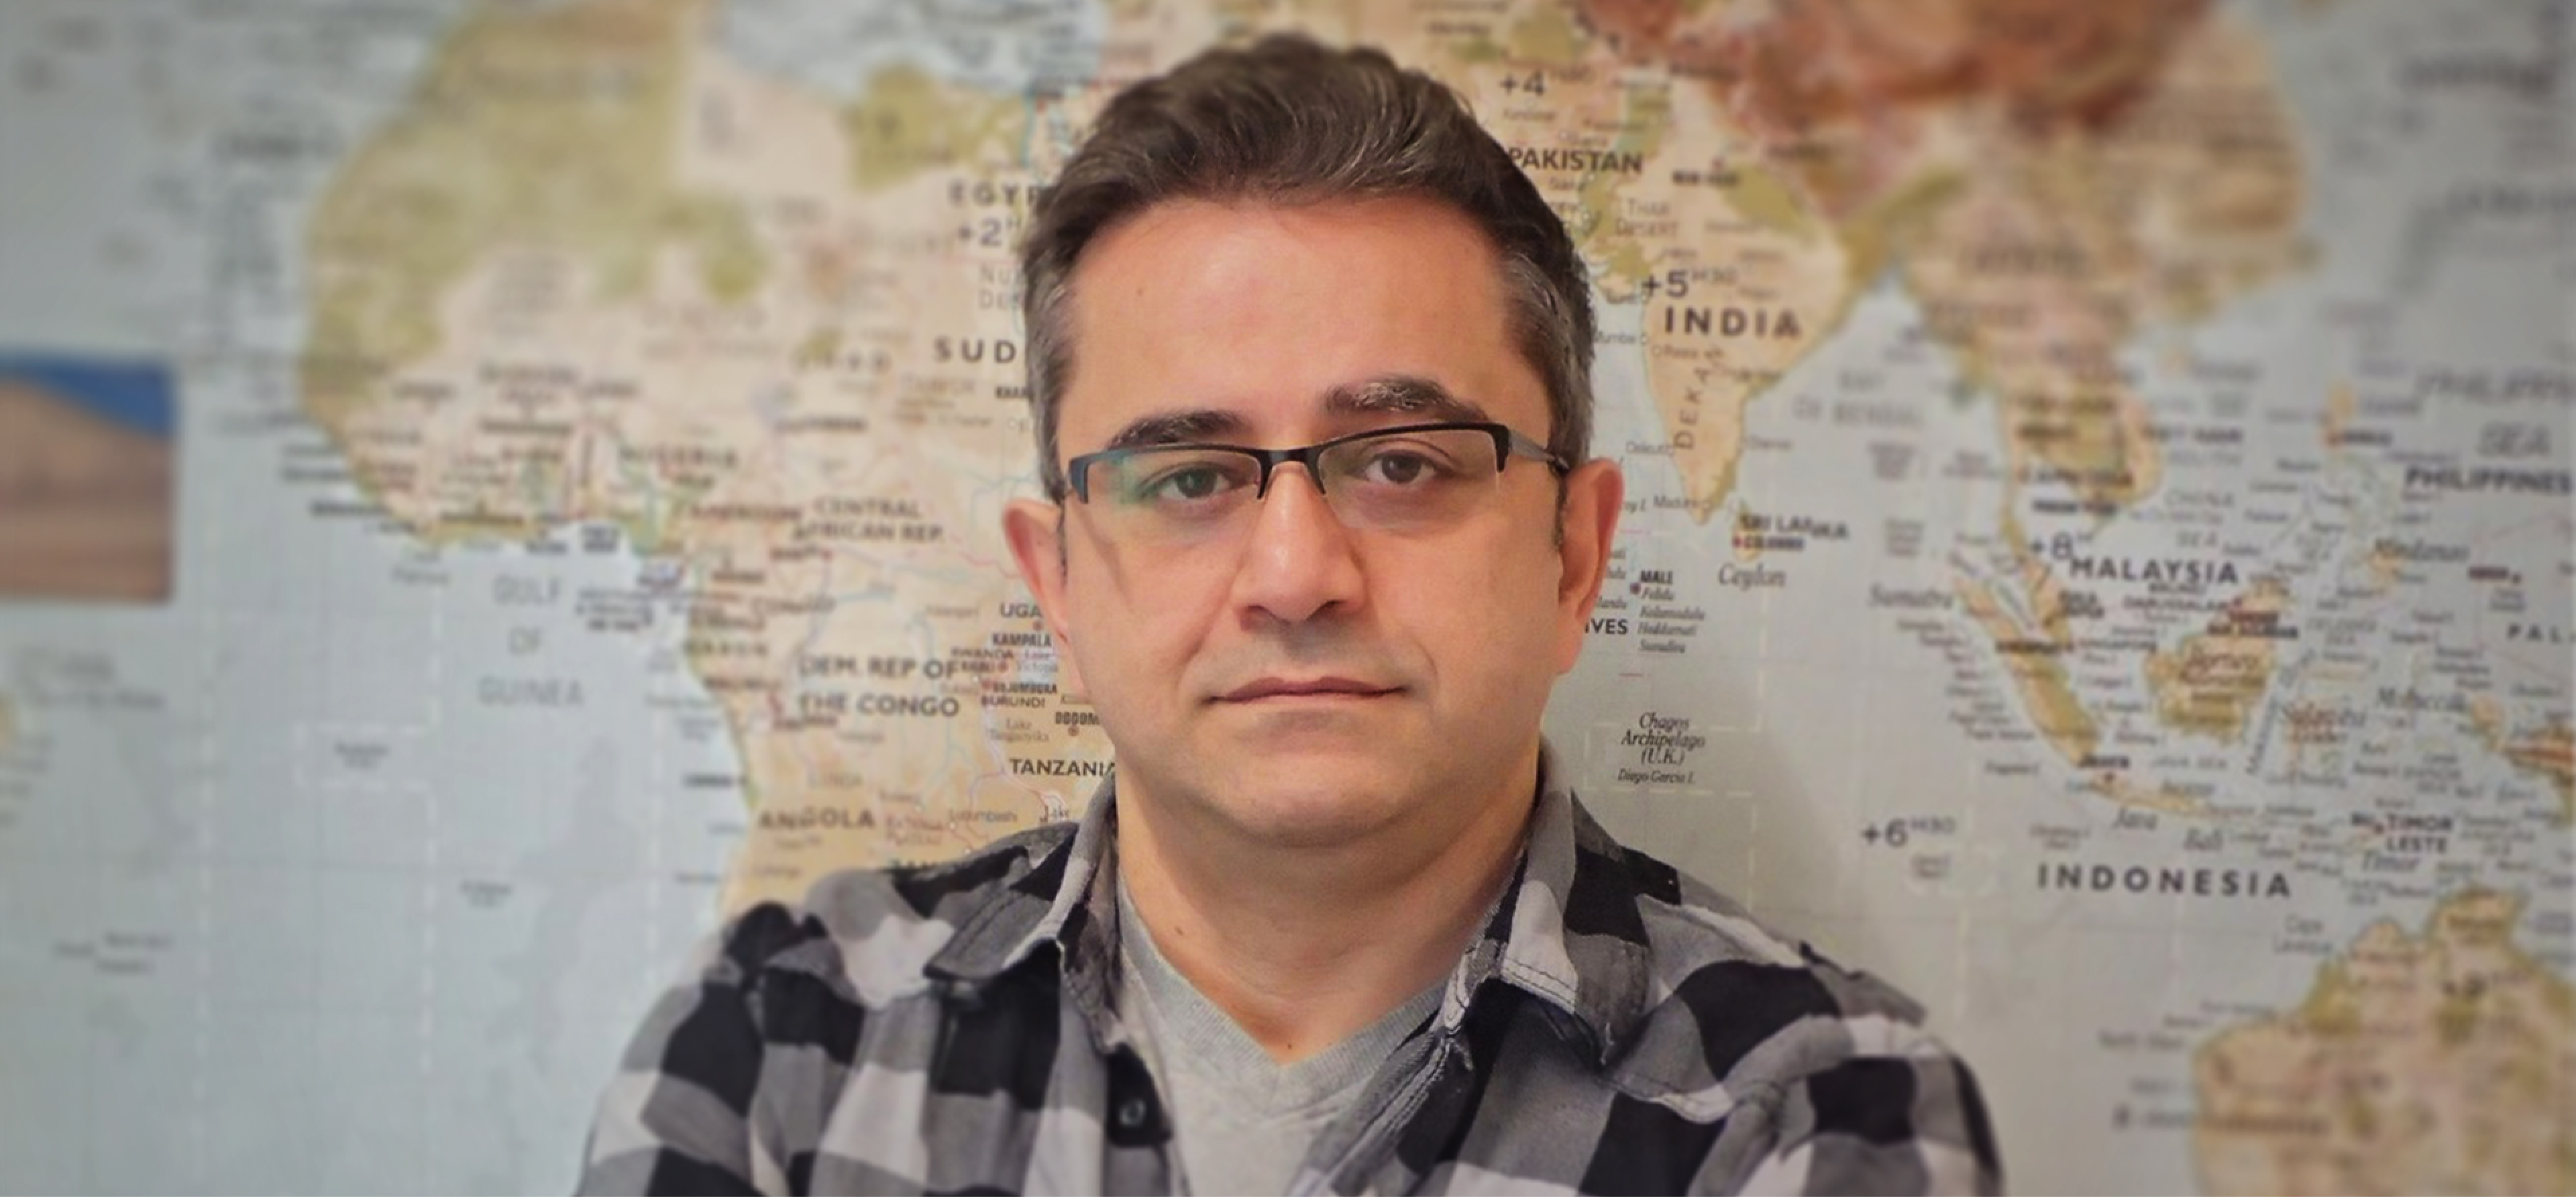 Portrait of Mohsen Makki in front of world map